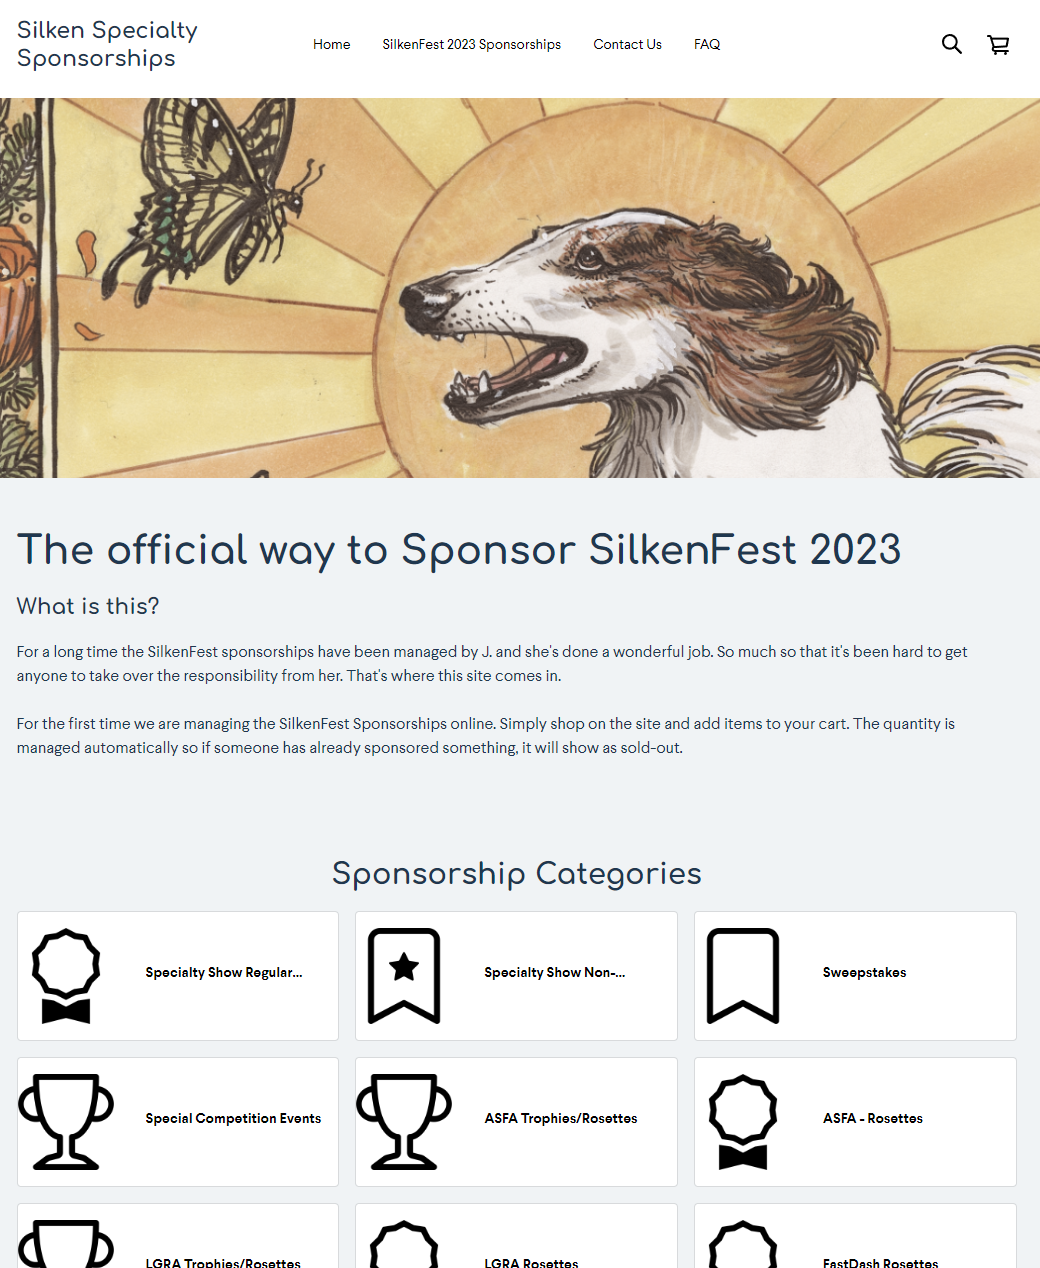 Silkenfest 2023 Sponsorship Site